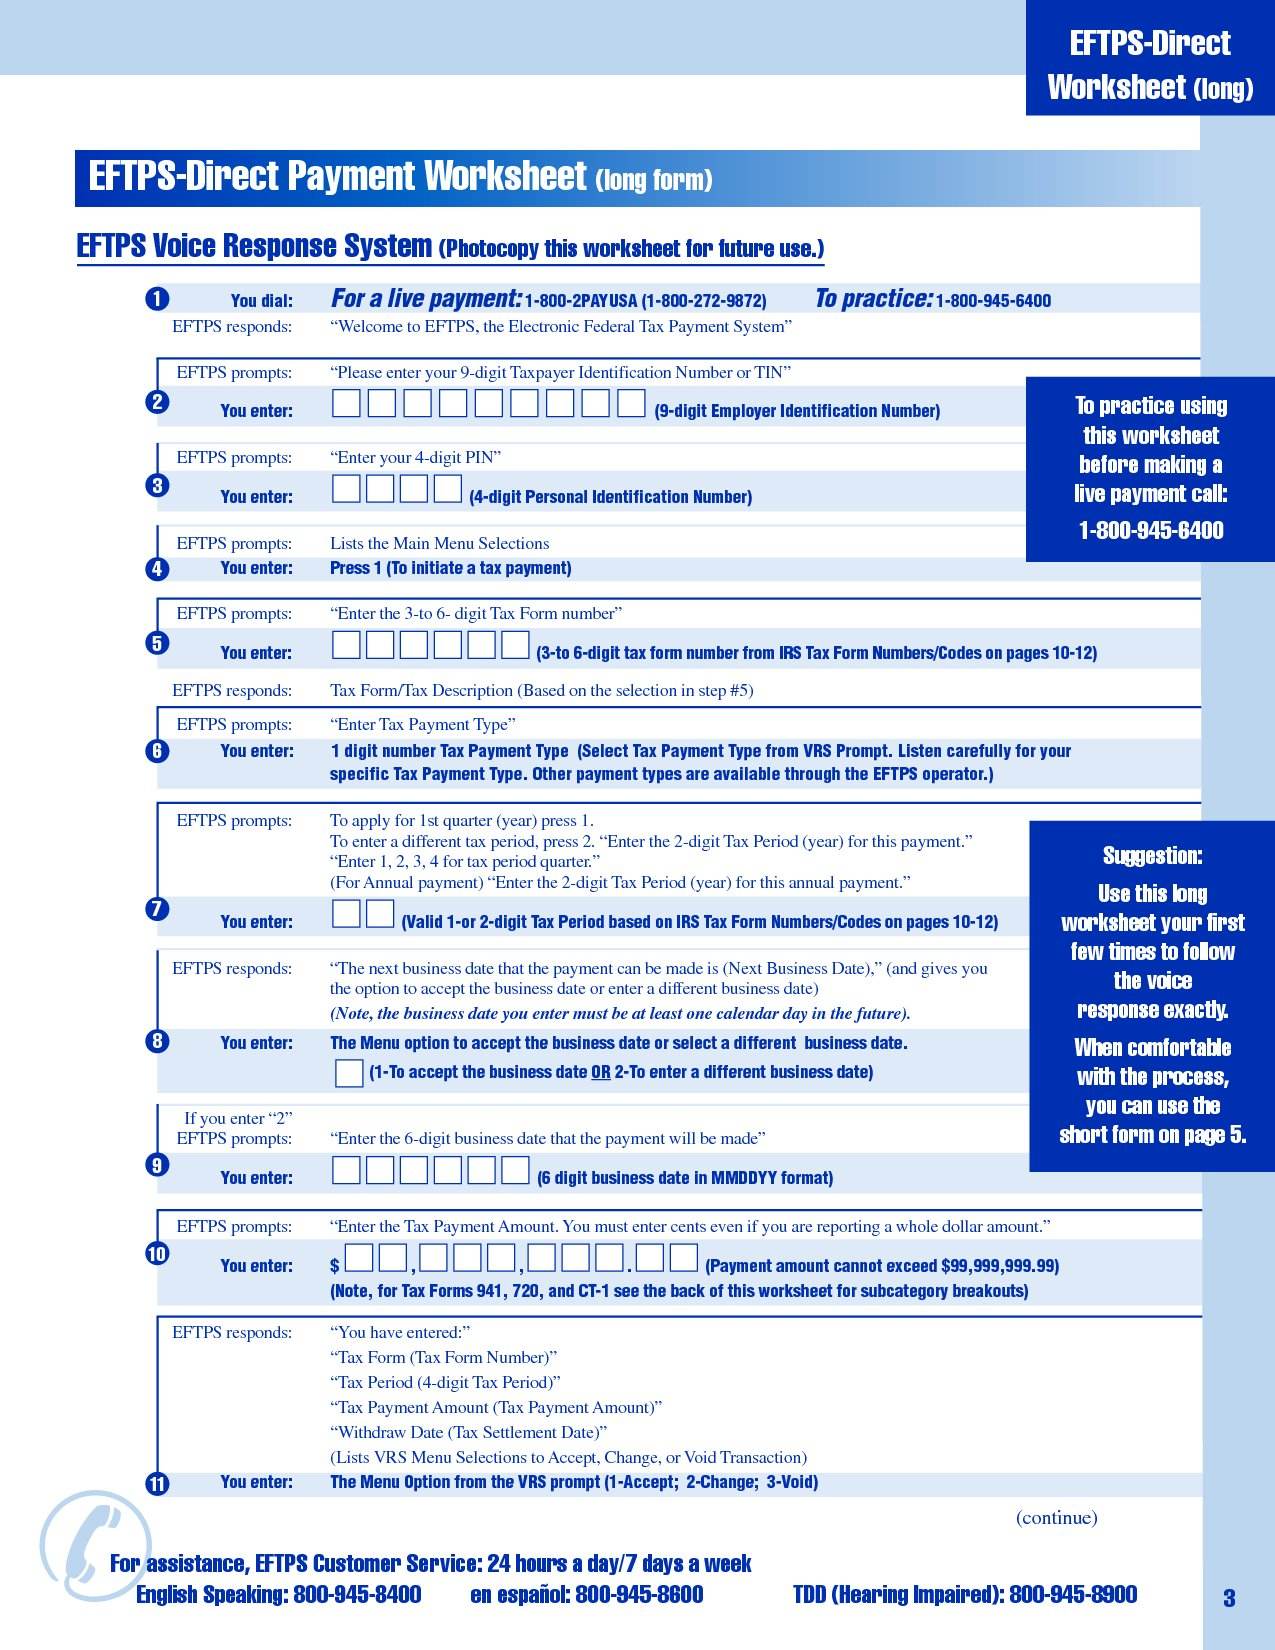 Eftps Business Phone Worksheet The Best Worksheets Image Collection Also Eftps Business Phone Worksheet